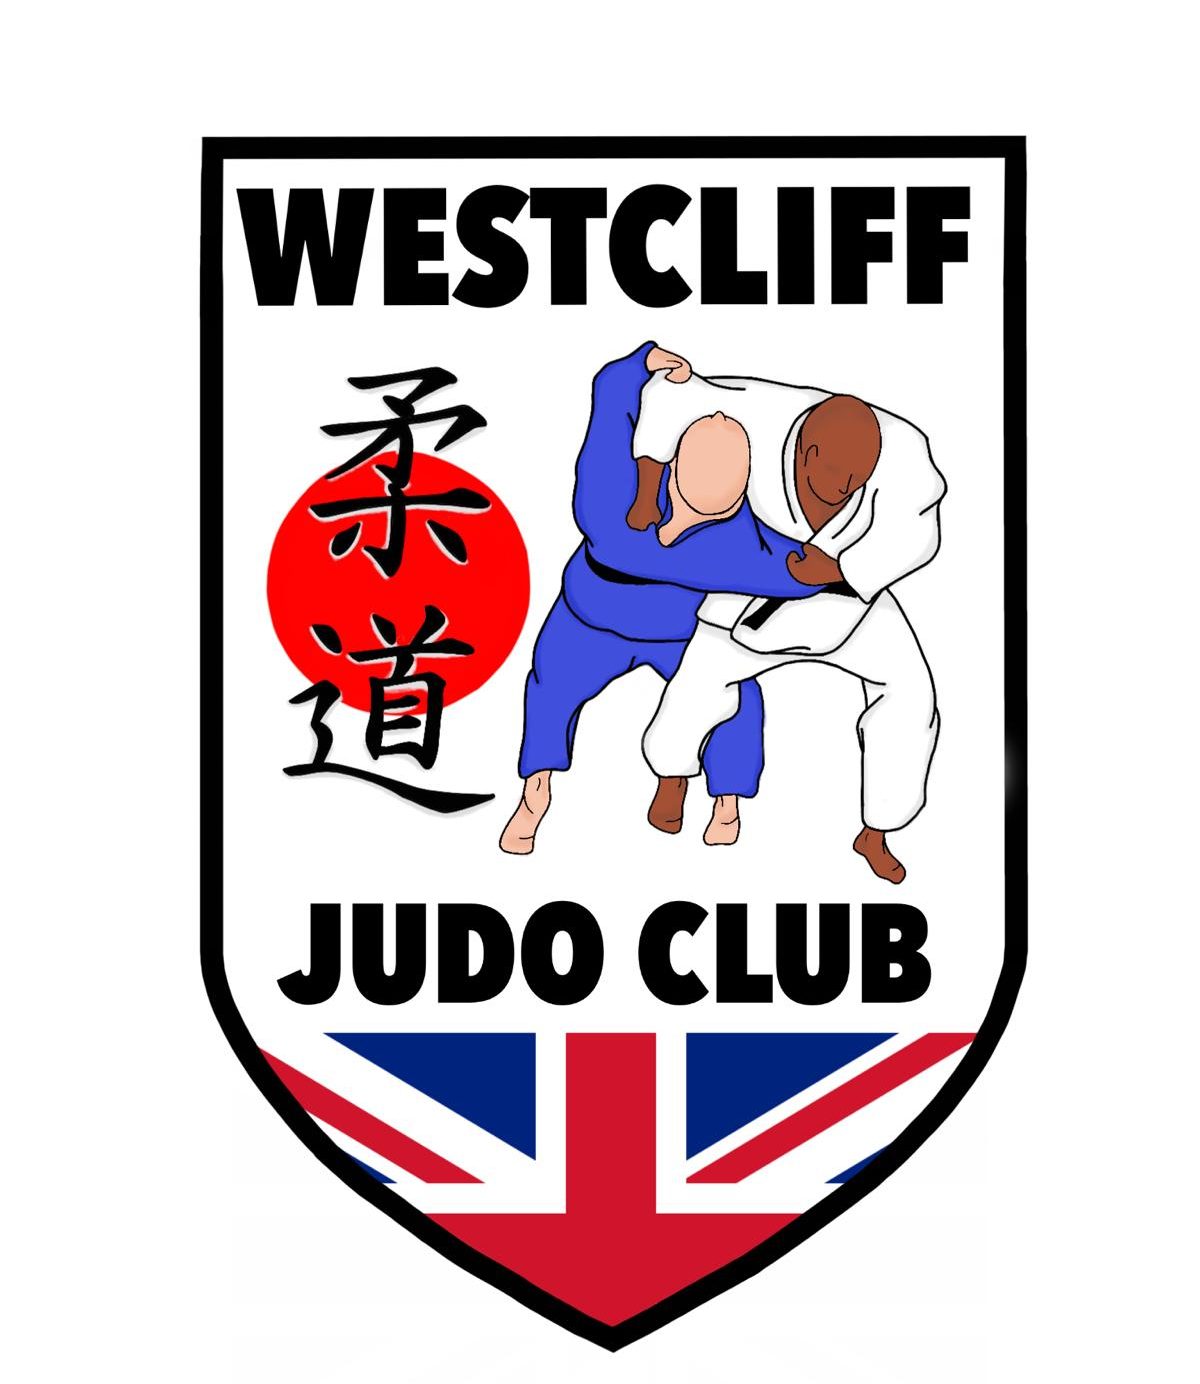 Westcliff Judo Club